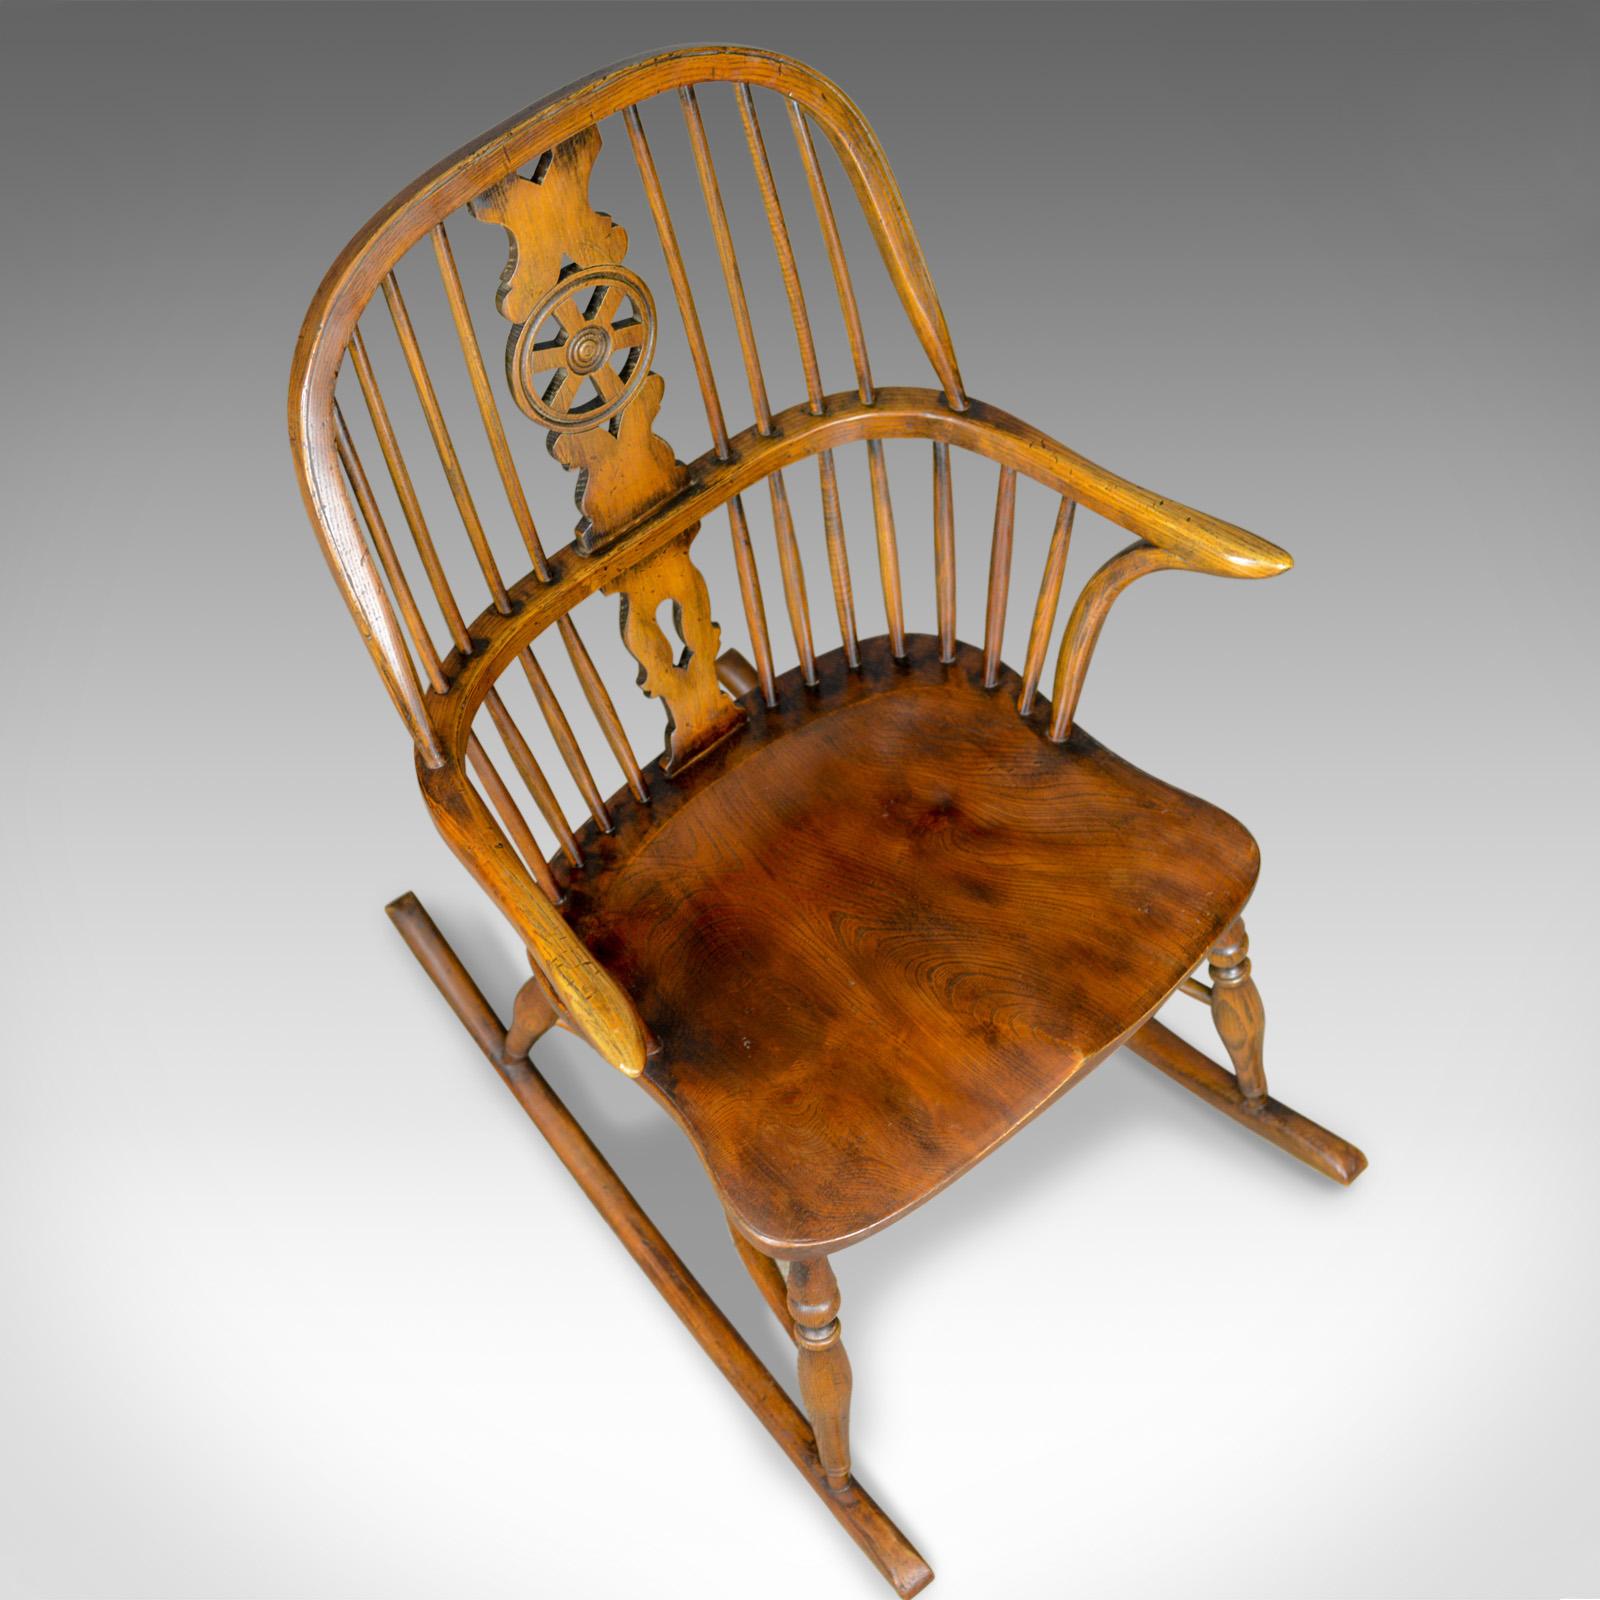 20th Century Antique Rocking Chair, English, Edwardian, Windsor Stick Back, Elbow, circa 1910